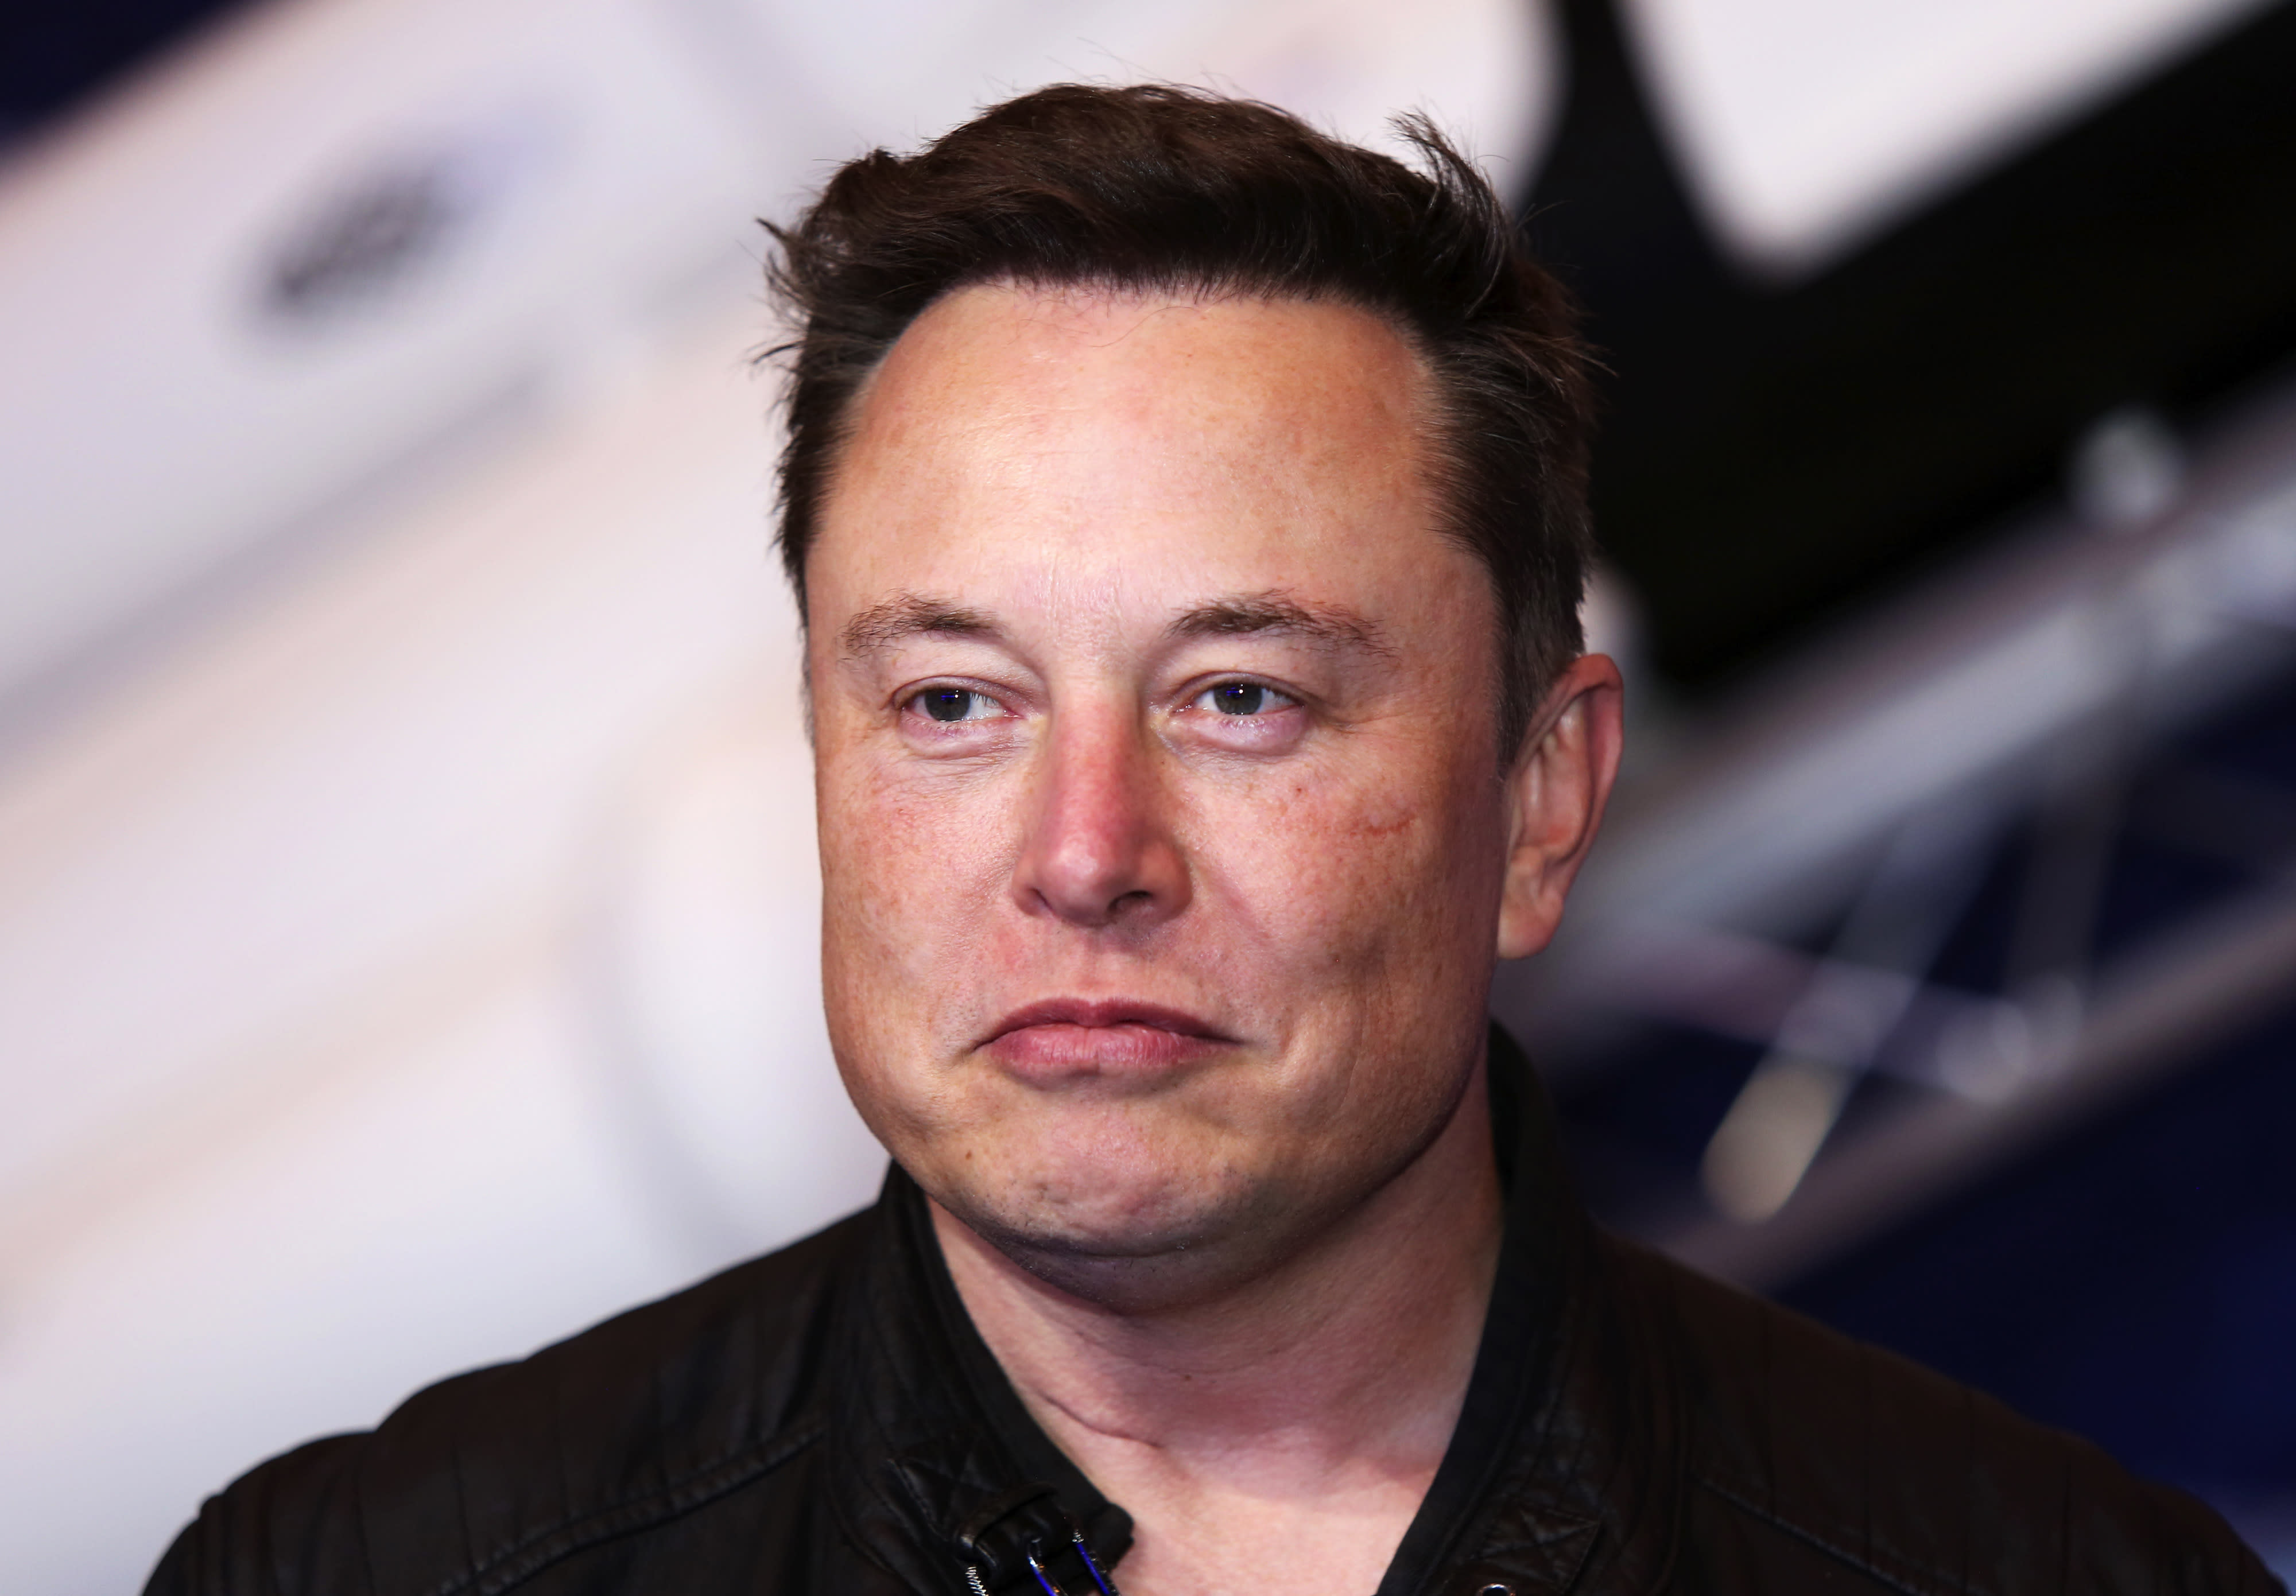 SEC said Elon Musk Tesla tweets violated settlement agreement per WSJ